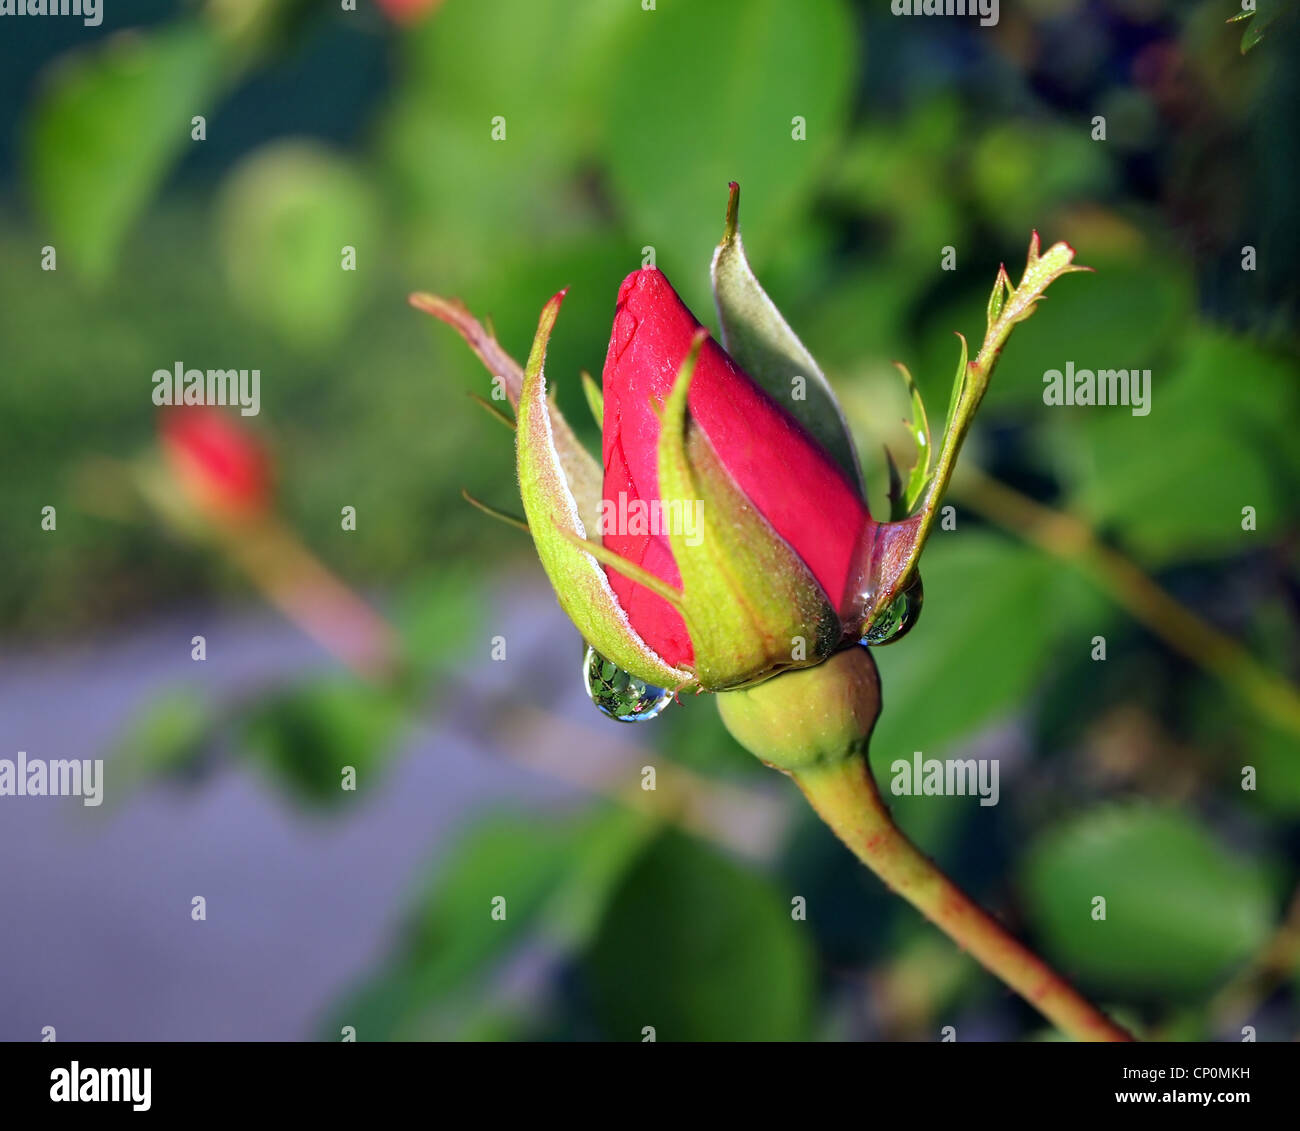 rose, rosebud, flower, garden, botanical, dewdrop, water. droplet, refraction, reflection, spring, rain, rosebush, magical Stock Photo